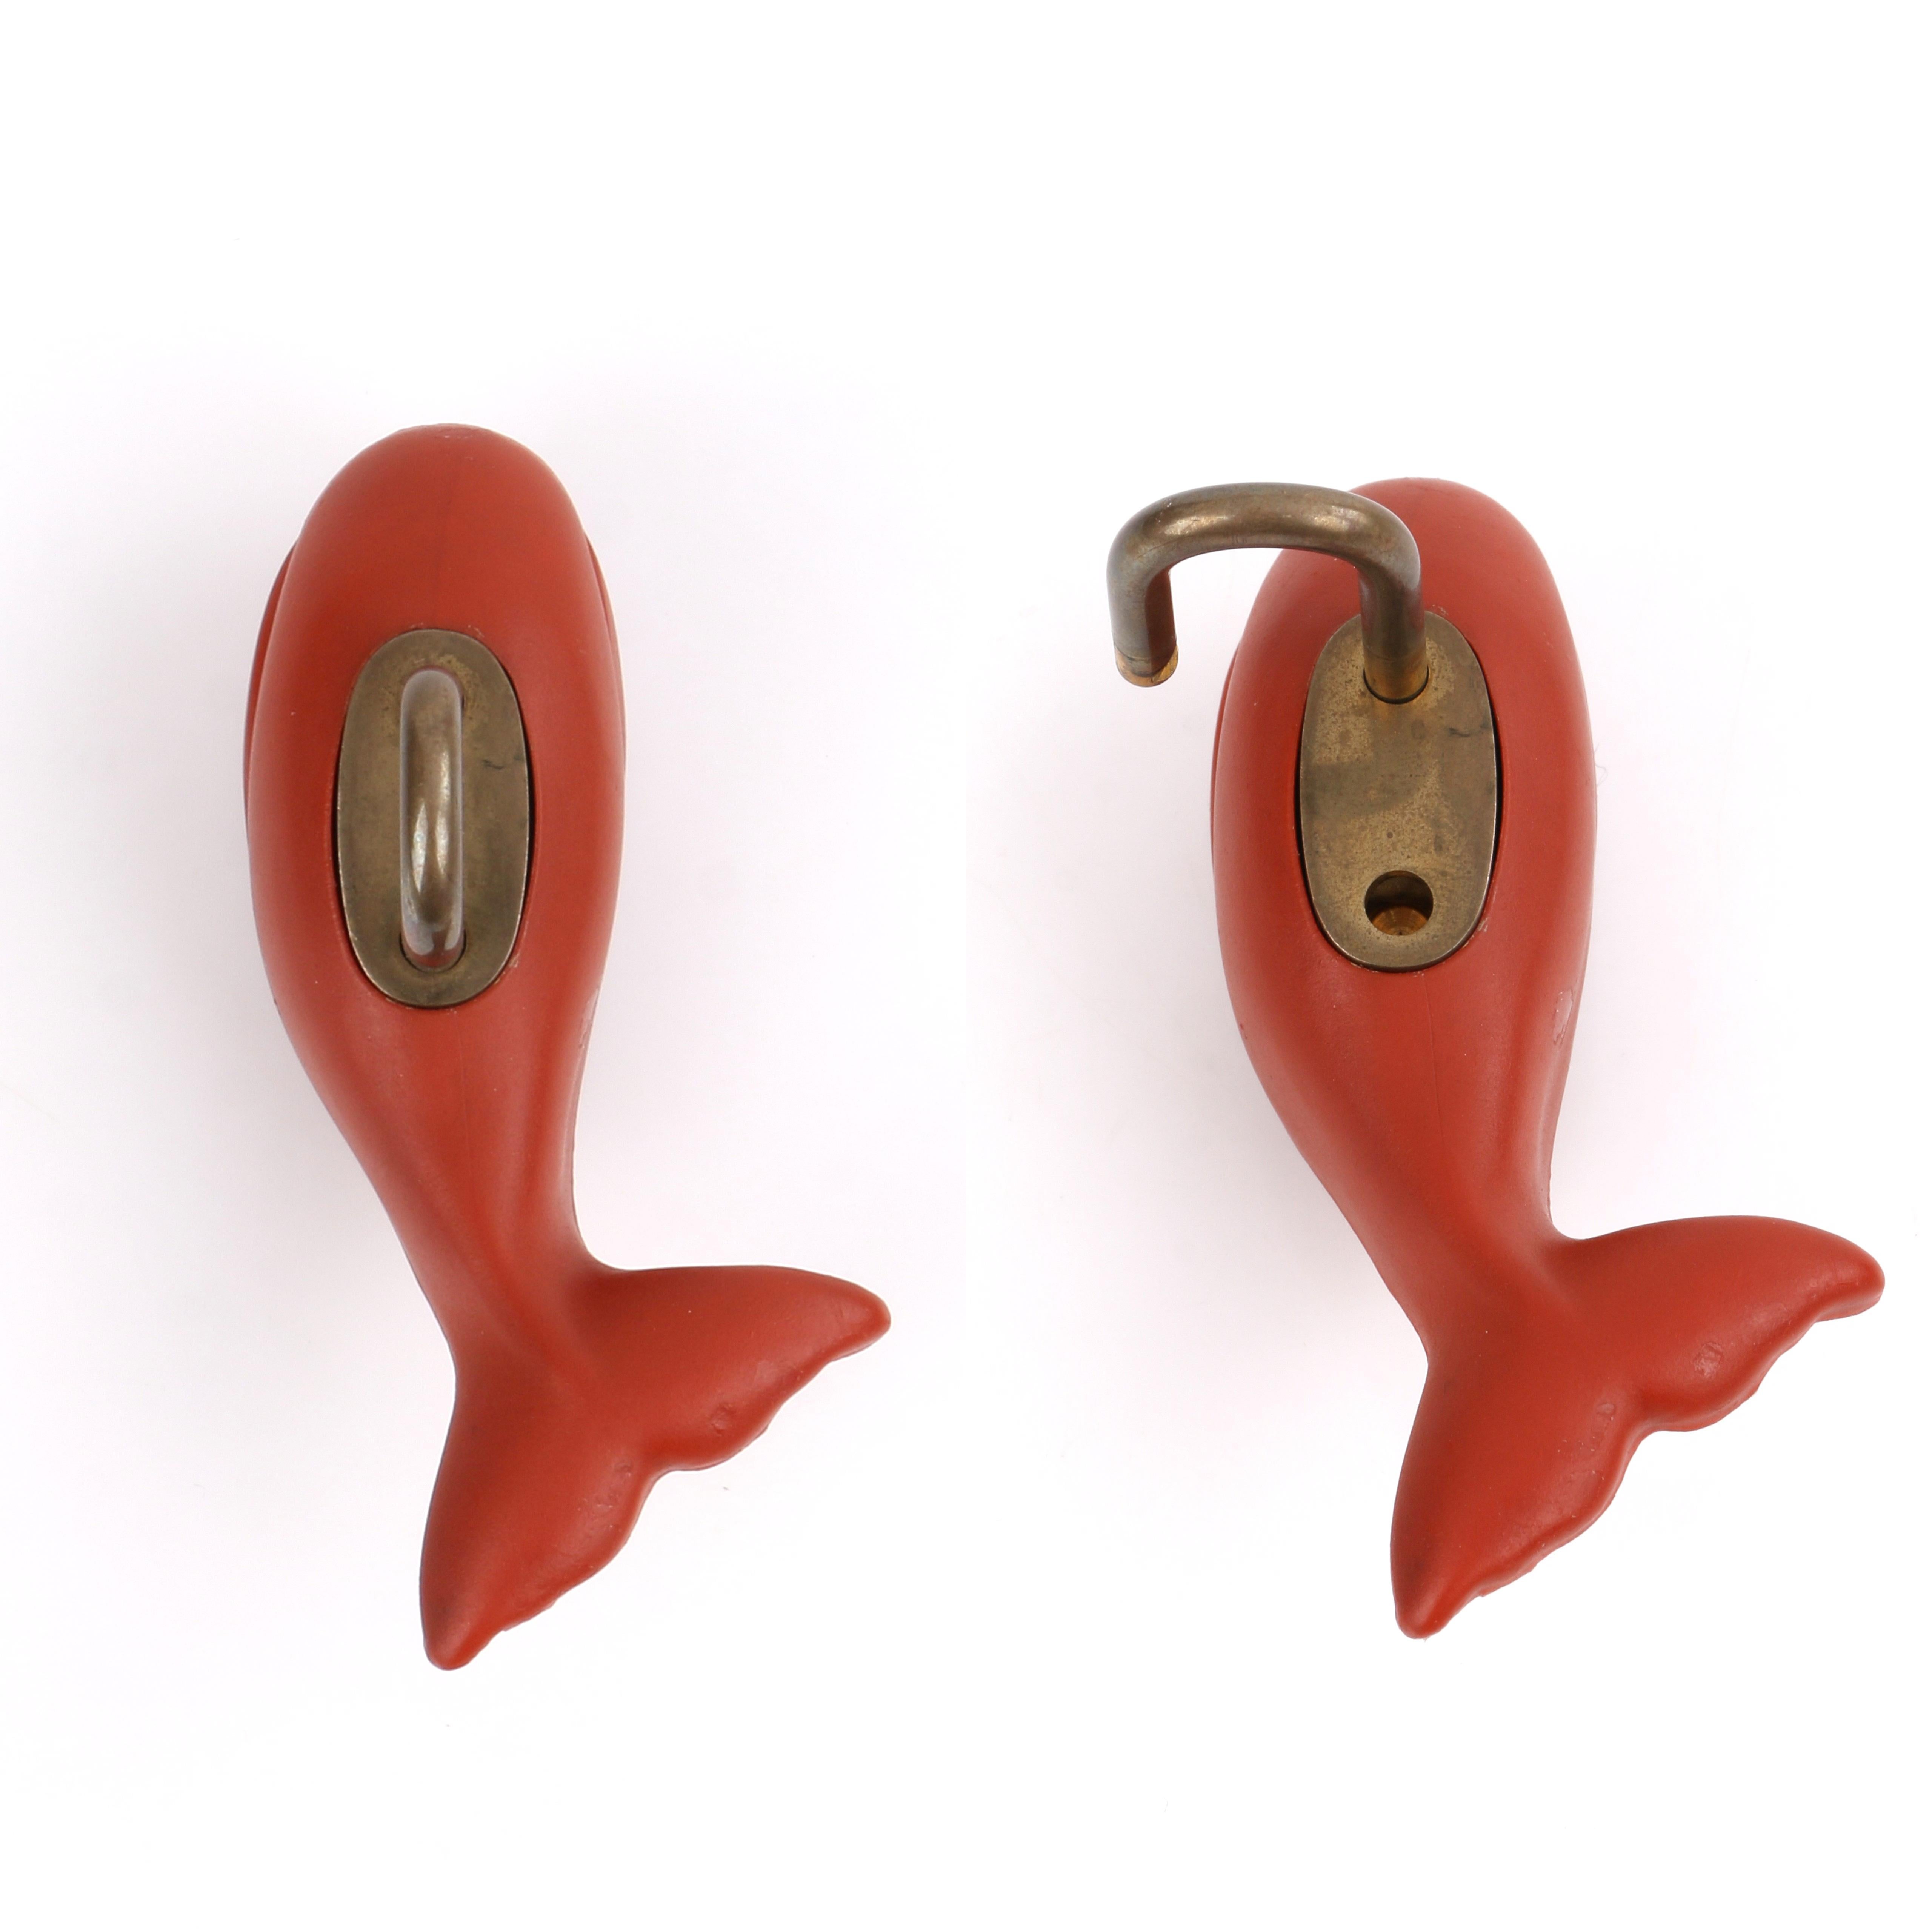 Louis Vuitton c.1995 America’s Cup Red Whale Motif Lock Keys Ltd Ed 1